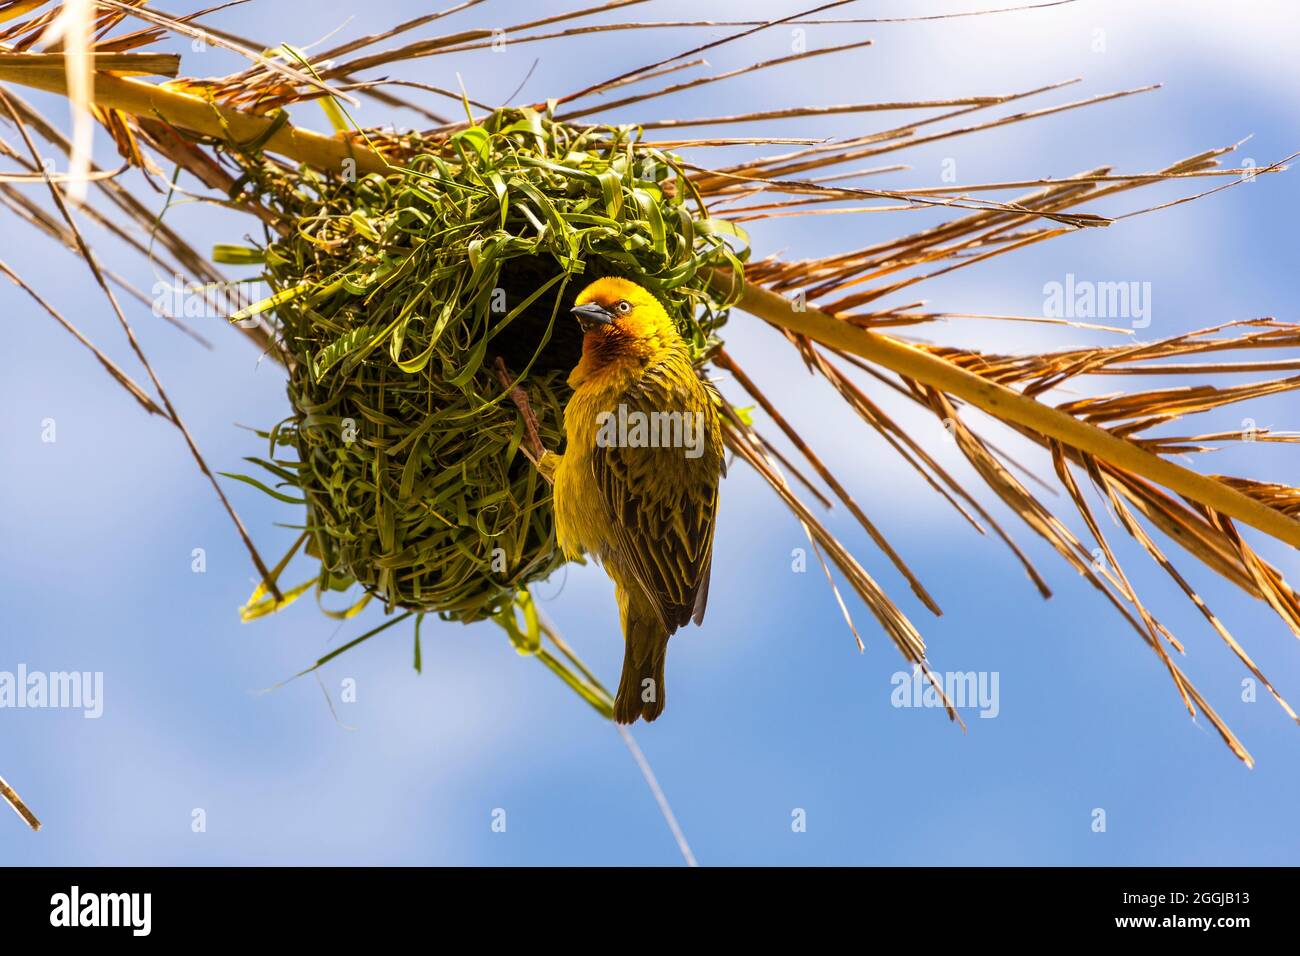 Tejedor amarillo - Argiope aurantia Foto de stock